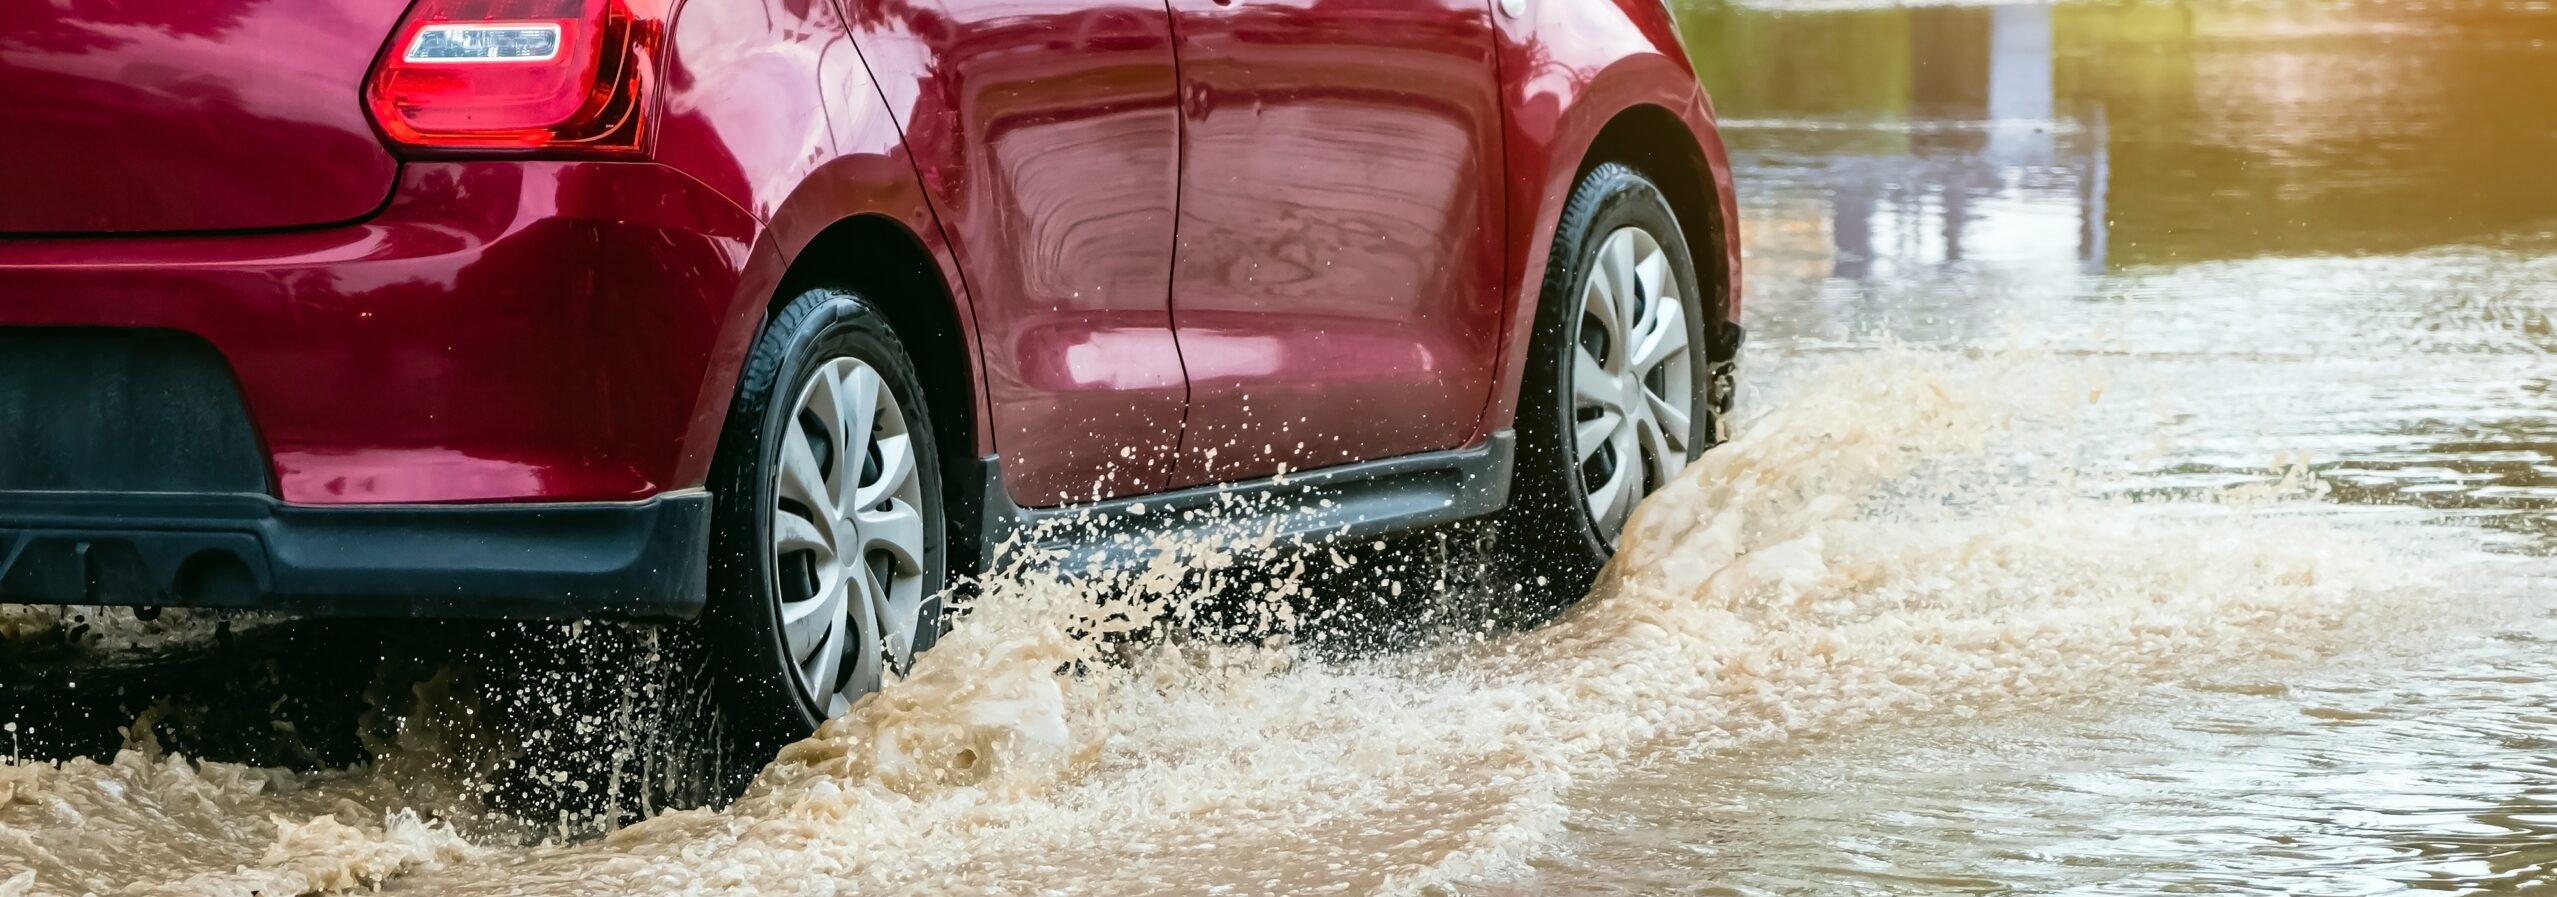 Menangani Banjir: Panduan Lengkap untuk Melindungi dan Memulihkan Mobil Anda